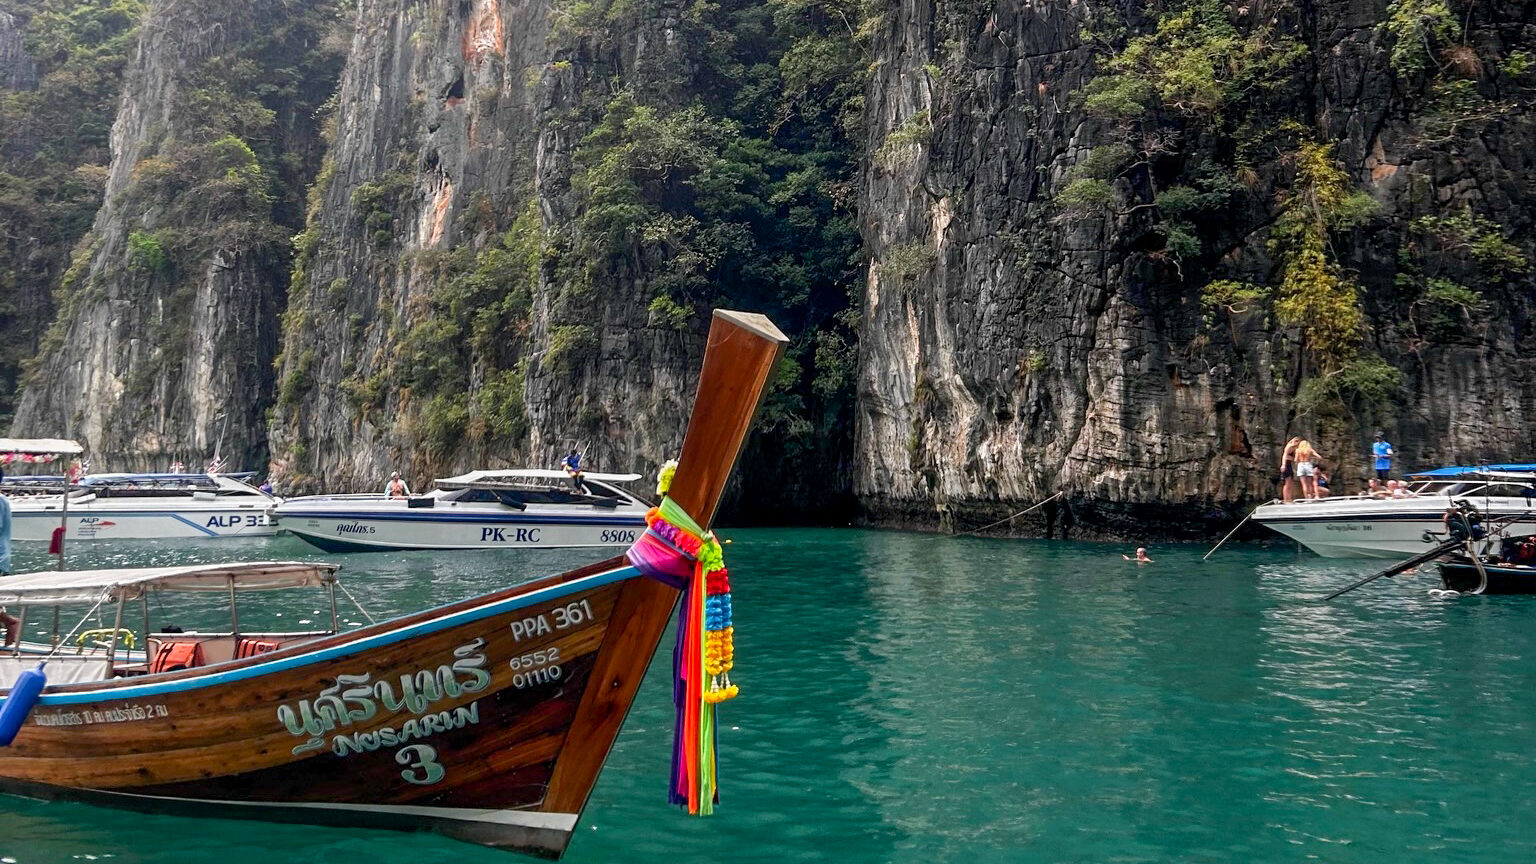 Thailand: The Ultimate Budget-Friendly Destination